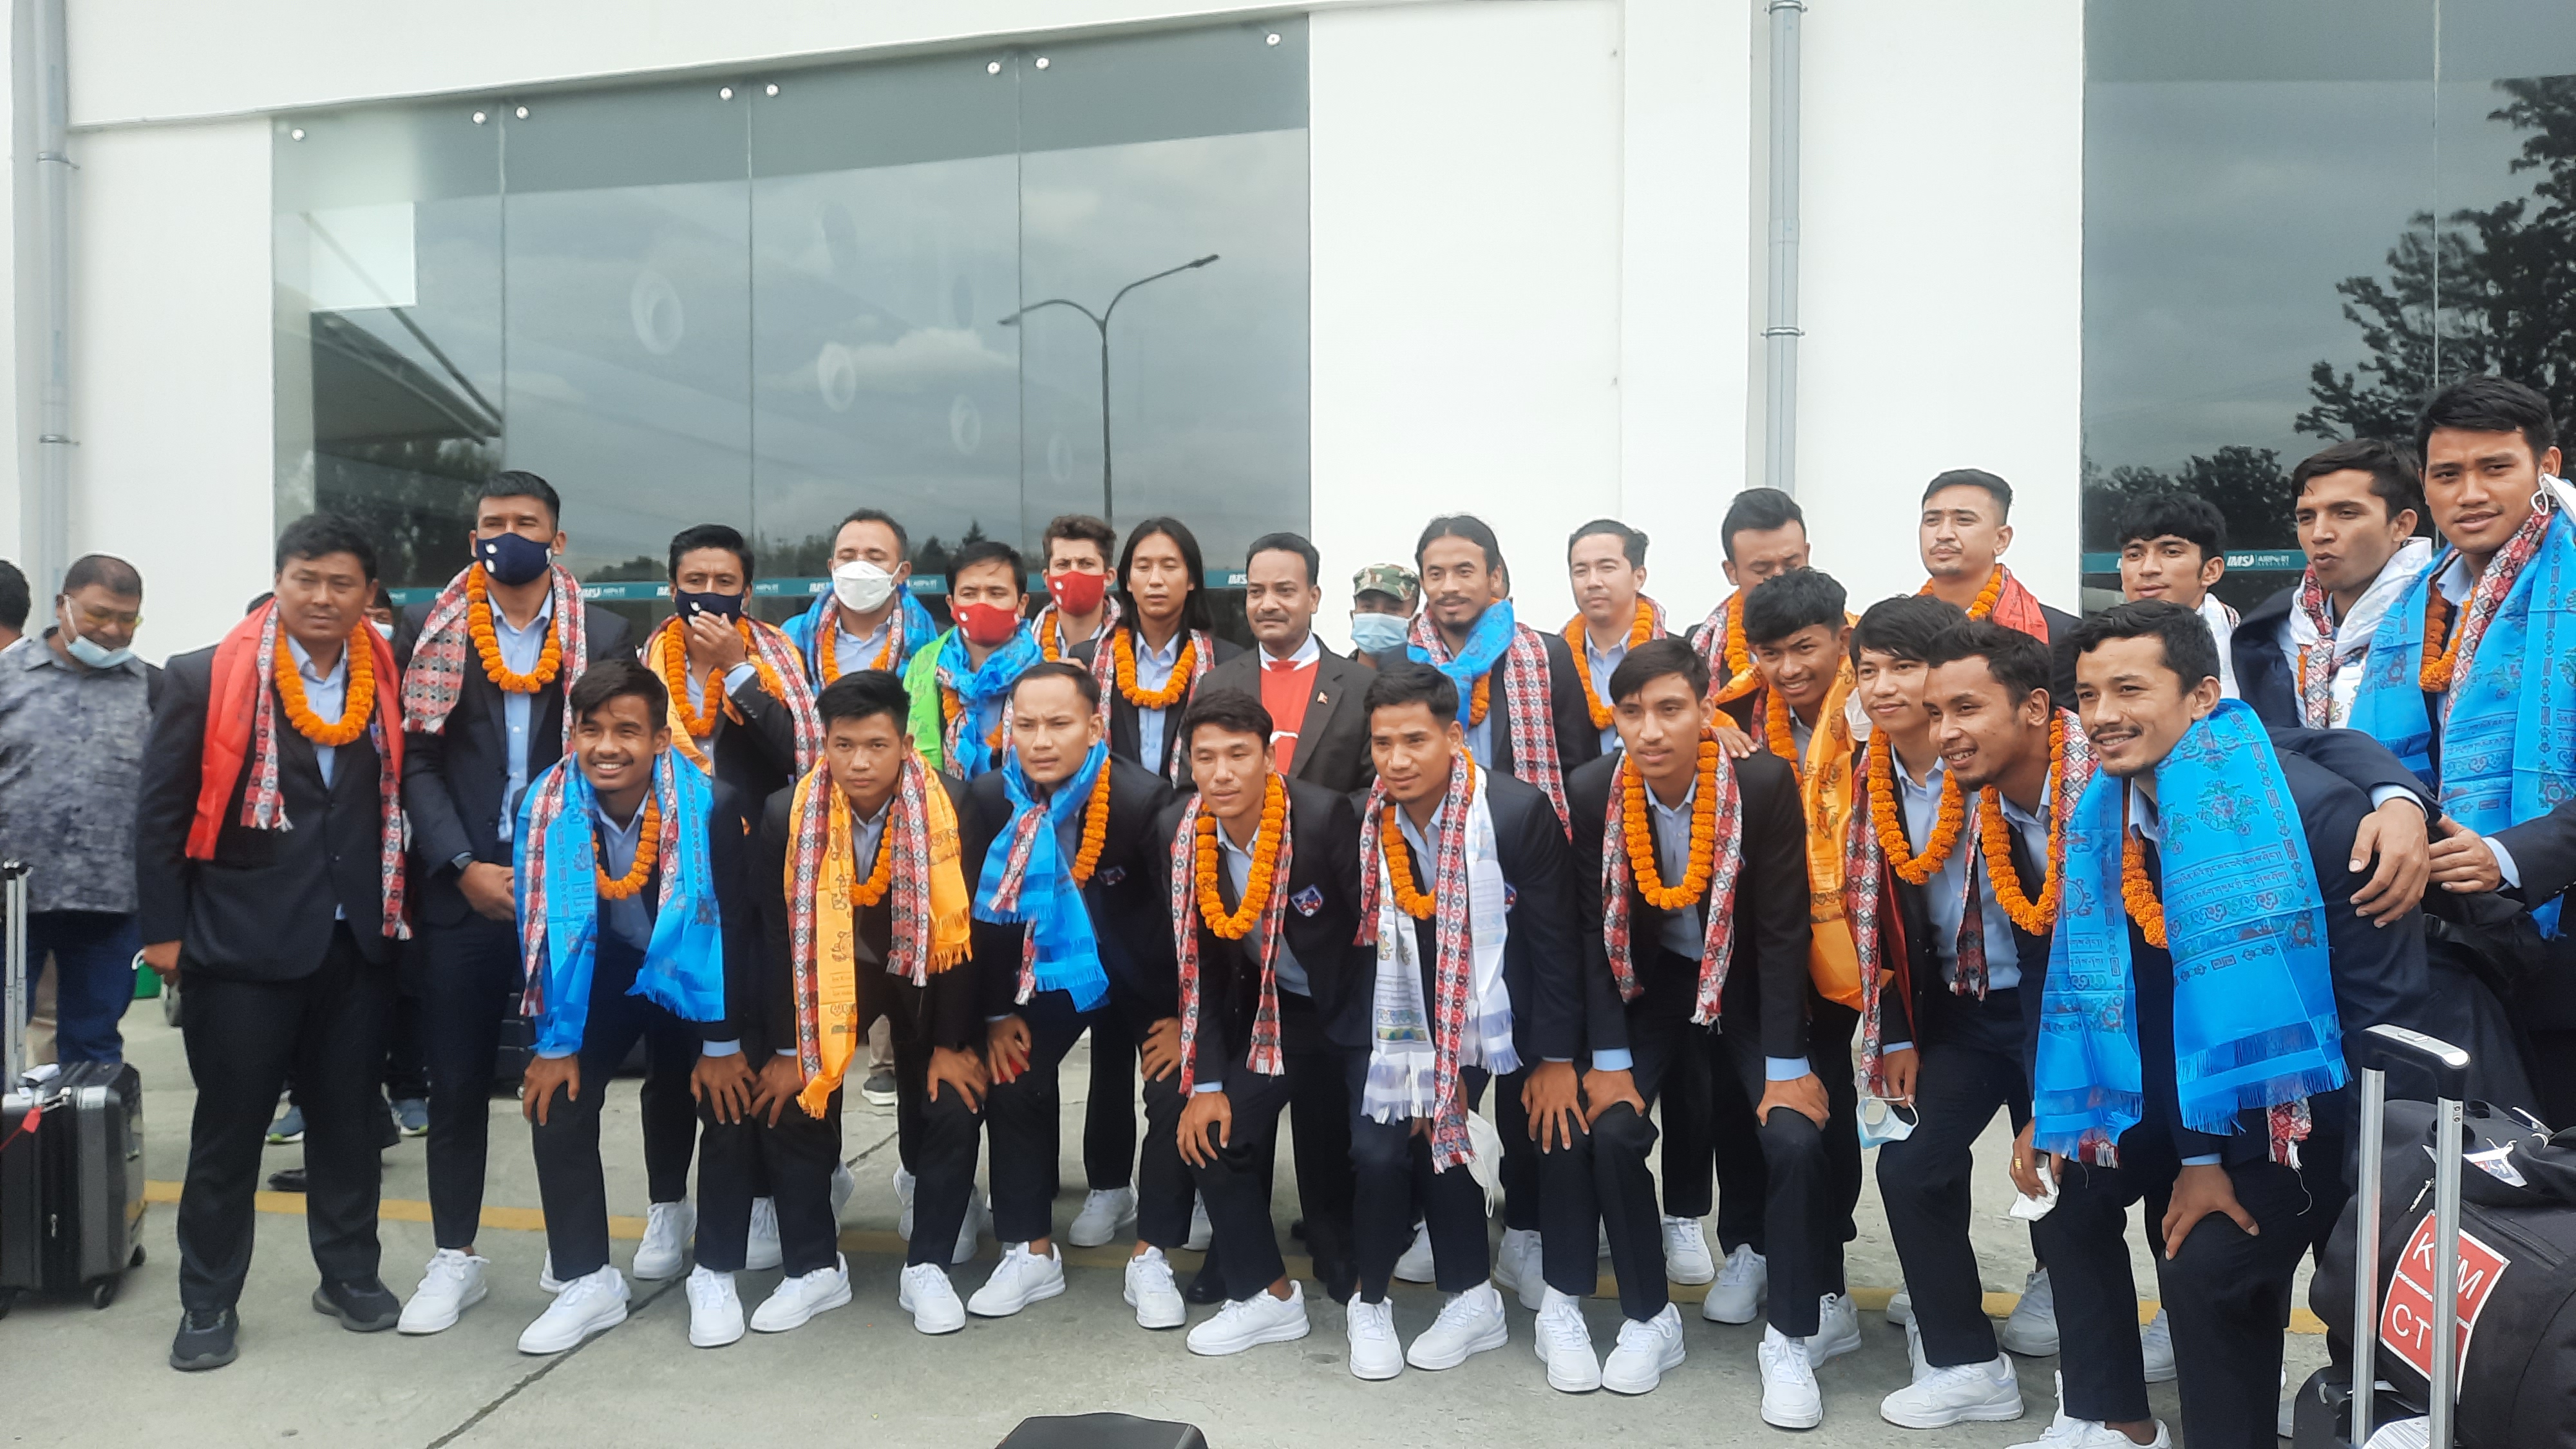 साफ उपविजेता नेपाली टिम स्वदेश फिर्ता, फ्यानले भव्य स्वागत (फोटो फिचर )